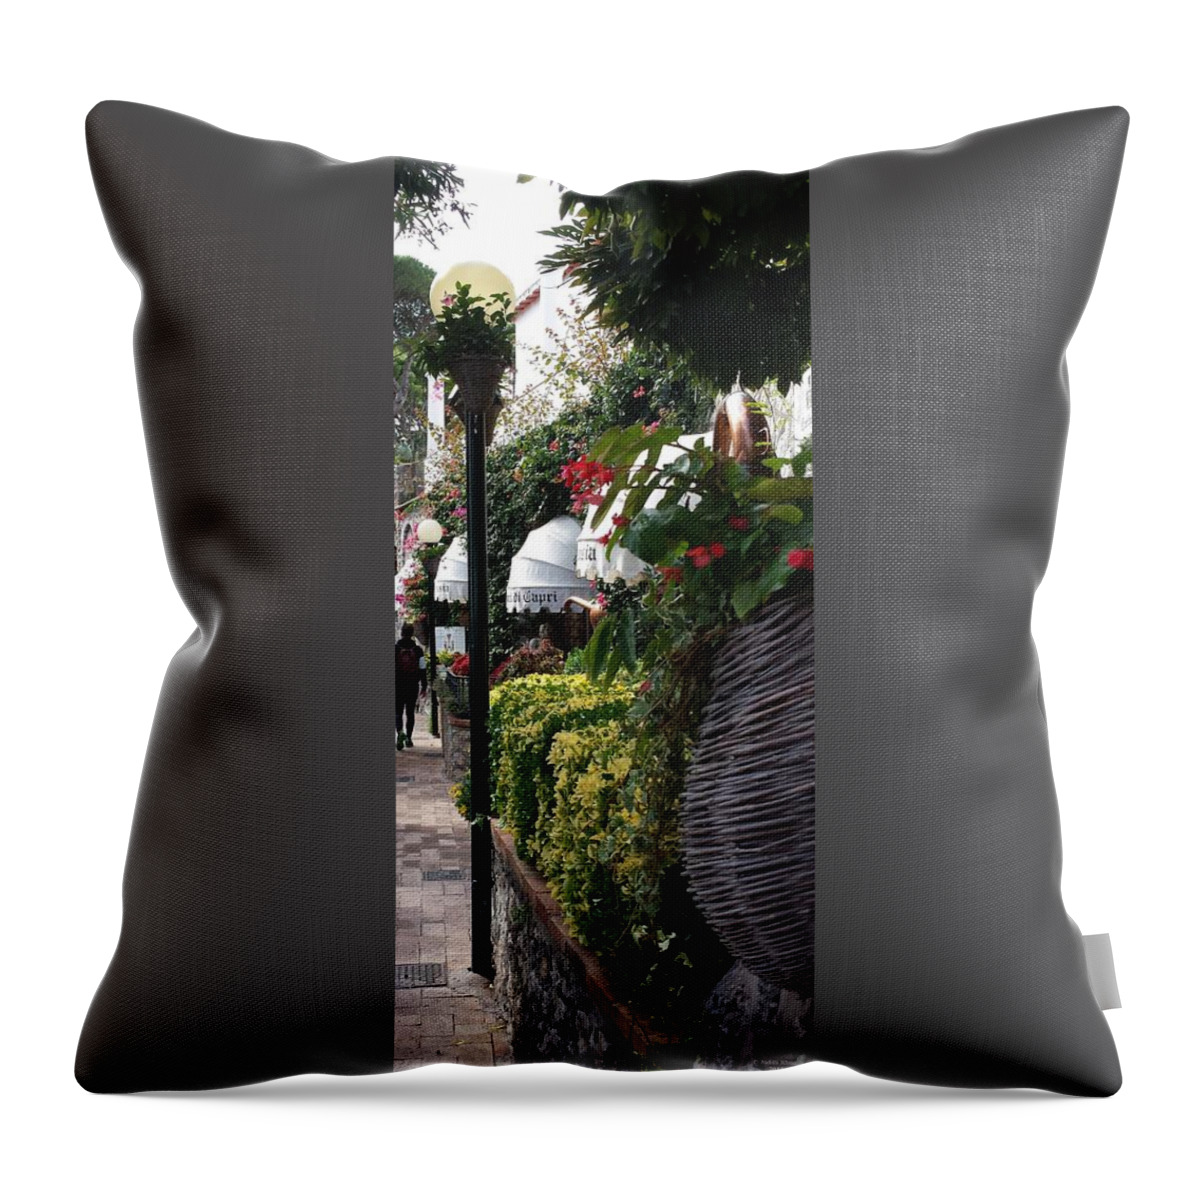 Capri Throw Pillow featuring the photograph Capri Street by Judith Rhue